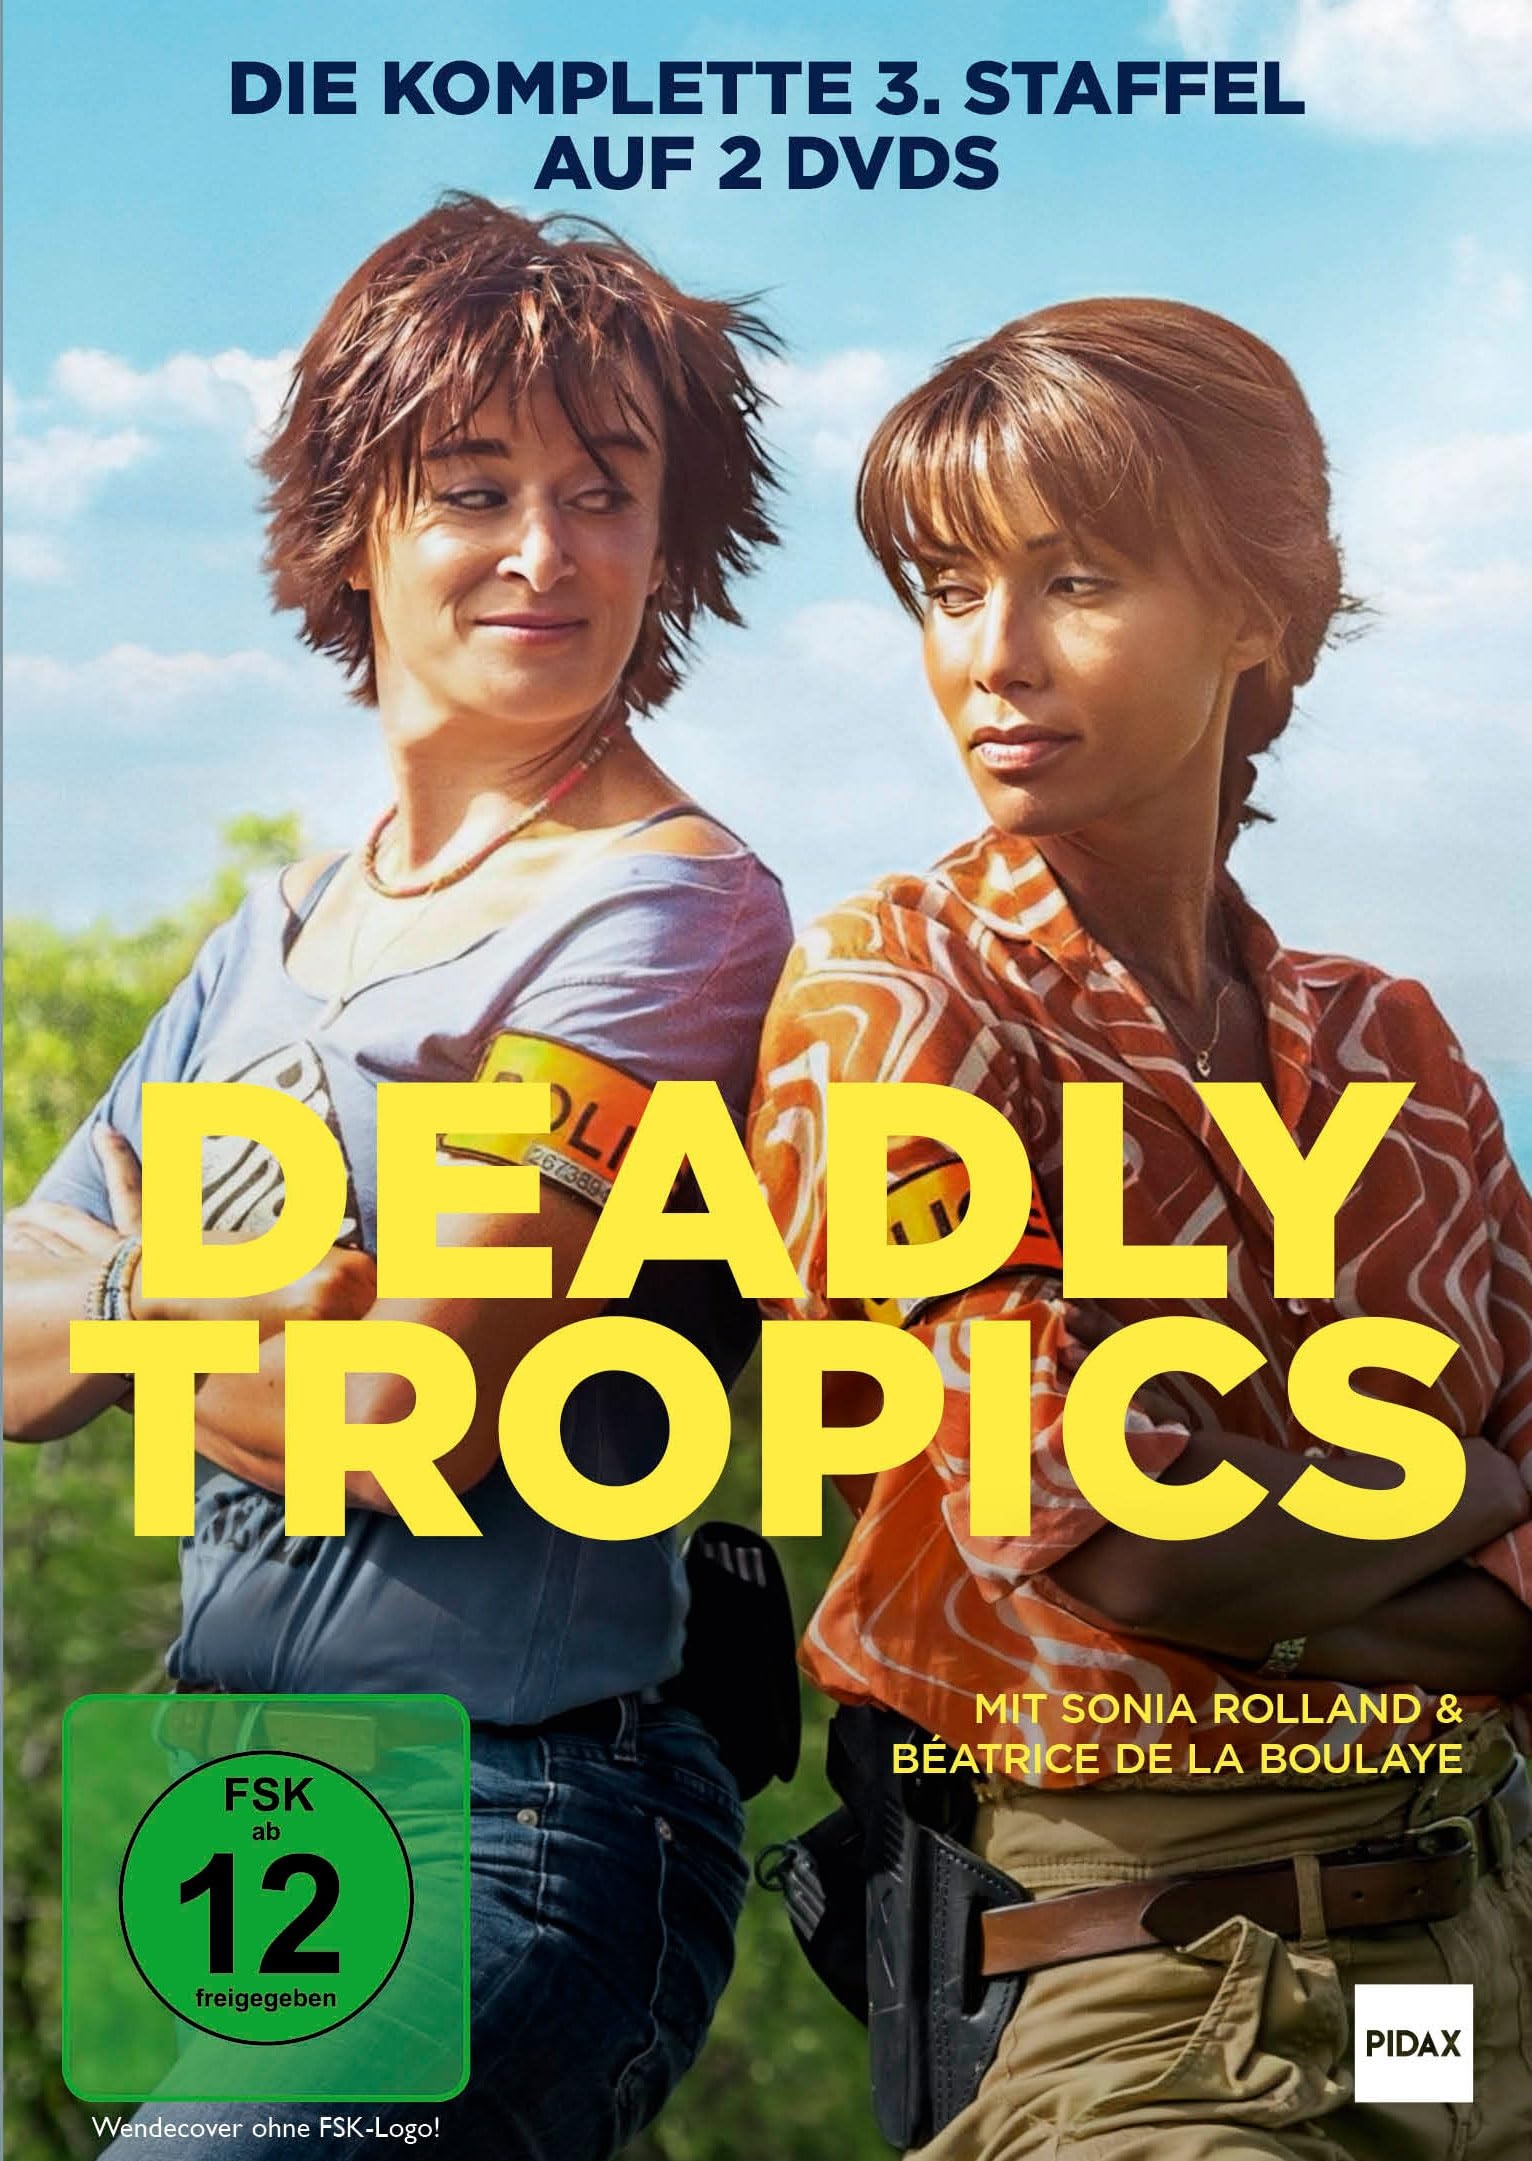 Deadly Tropics, Staffel 3 (Tropiques criminels) / Weitere 8 Folgen der erfolgreichen Krimiserie [2 DVDs] (Neu differenzbesteuert)